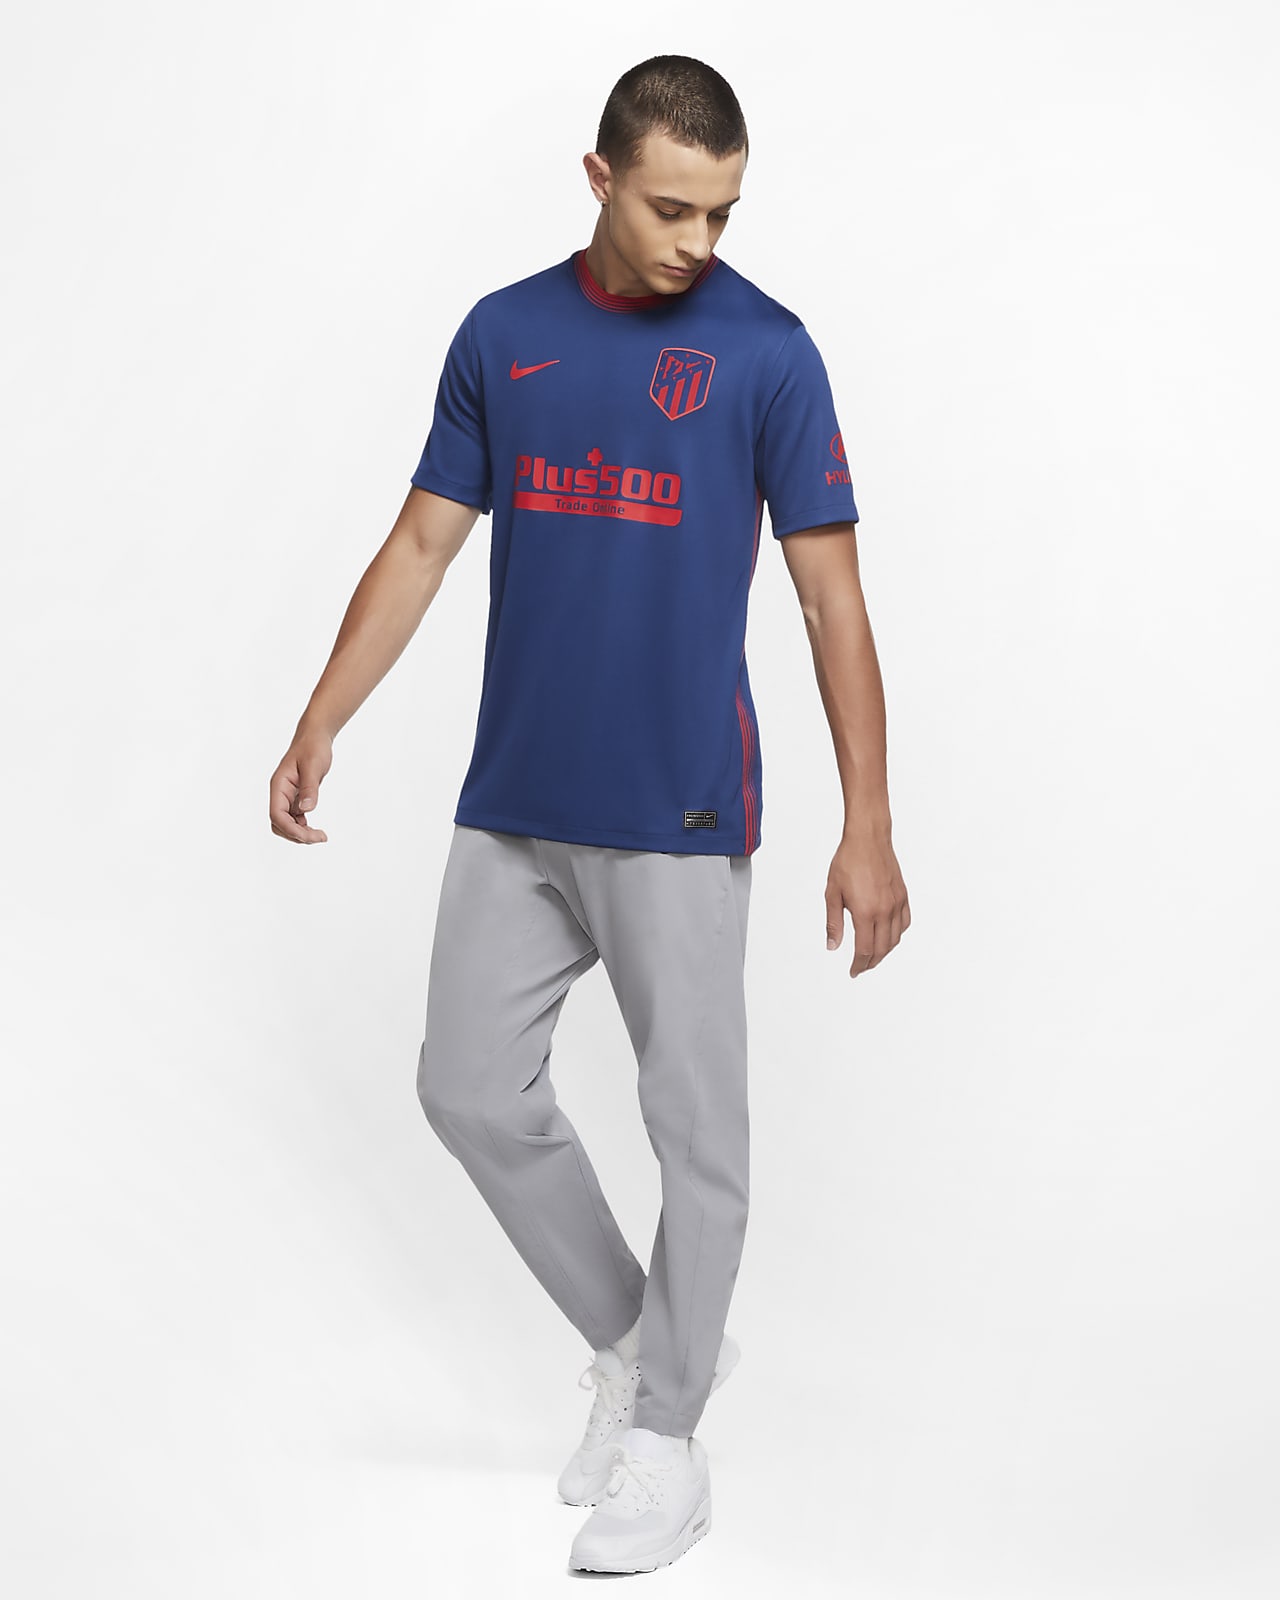 Atlético Madrid 2020-21 Nike Away Kit | 20/21 Kits | Football shirt blog